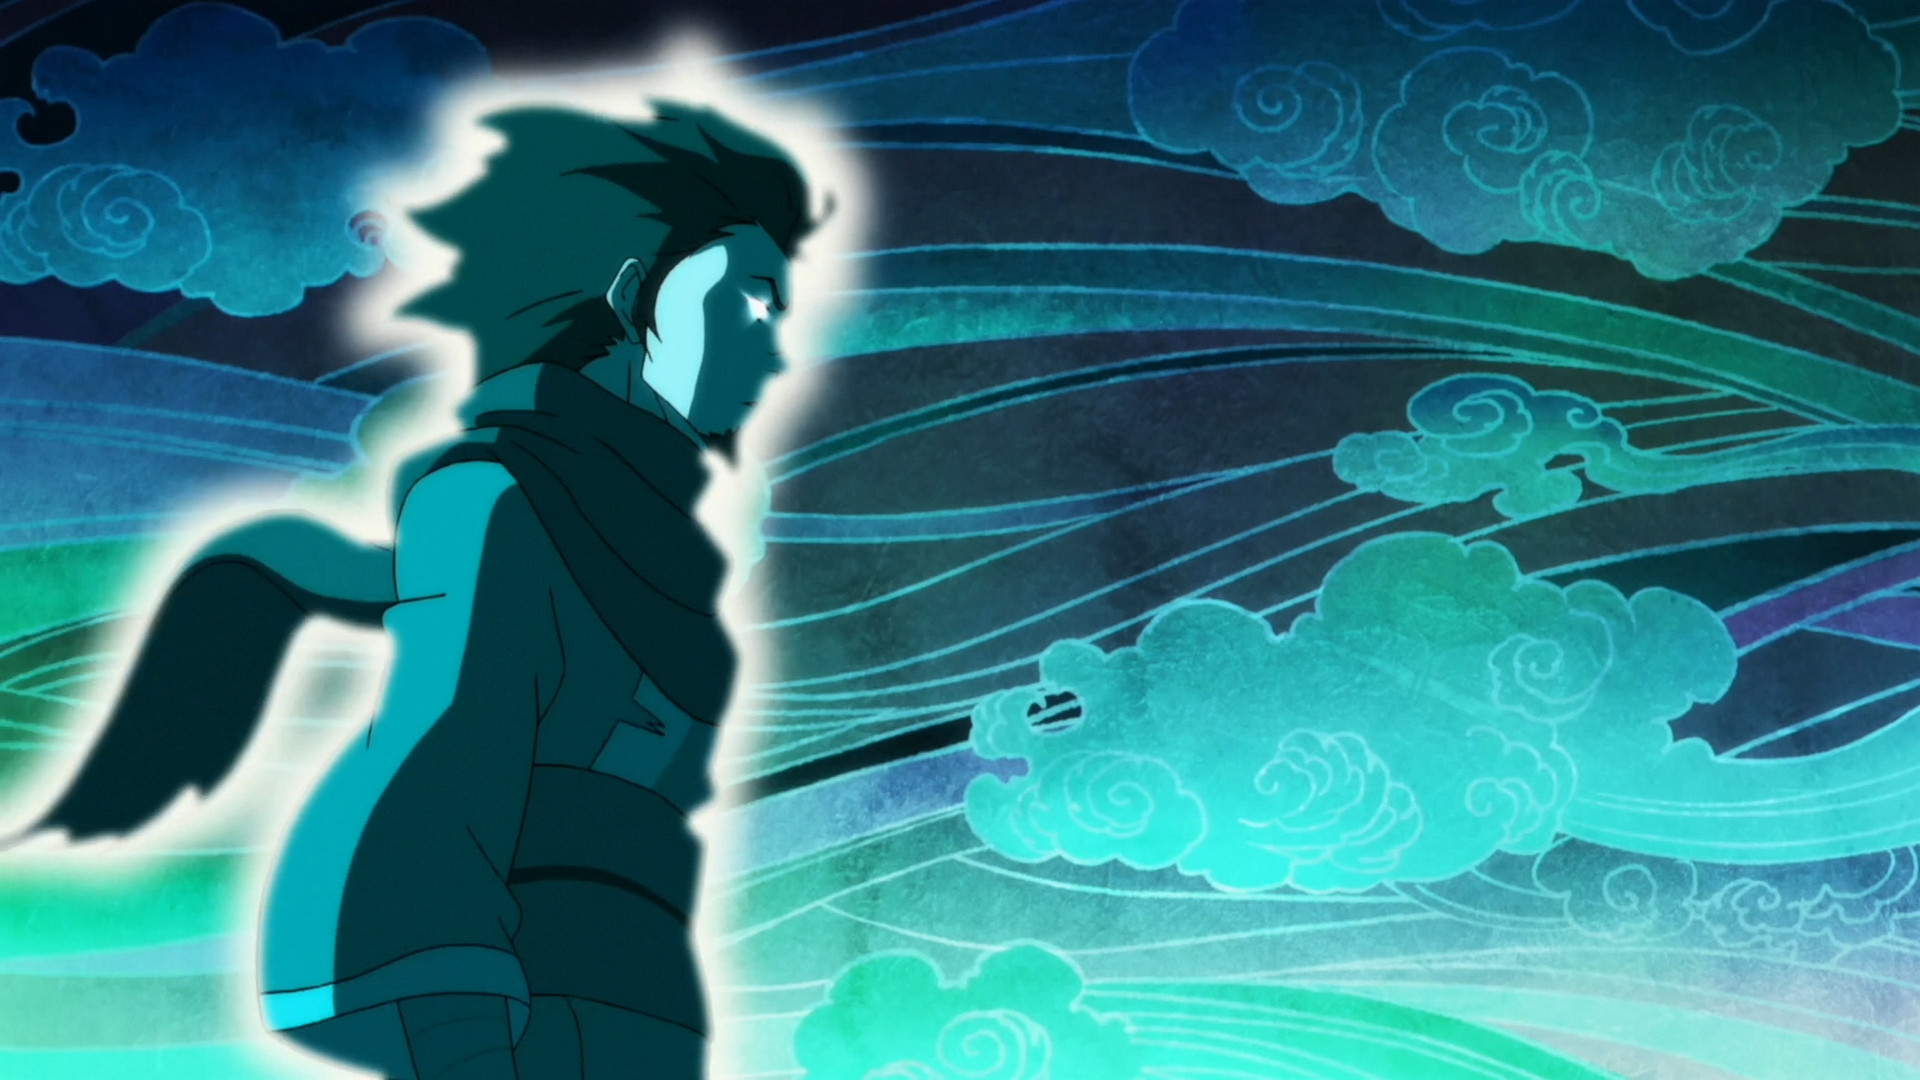 Descarga gratis la imagen Animado, Avatar: La Leyenda De Korra, Avatar (Anime) en el escritorio de tu PC